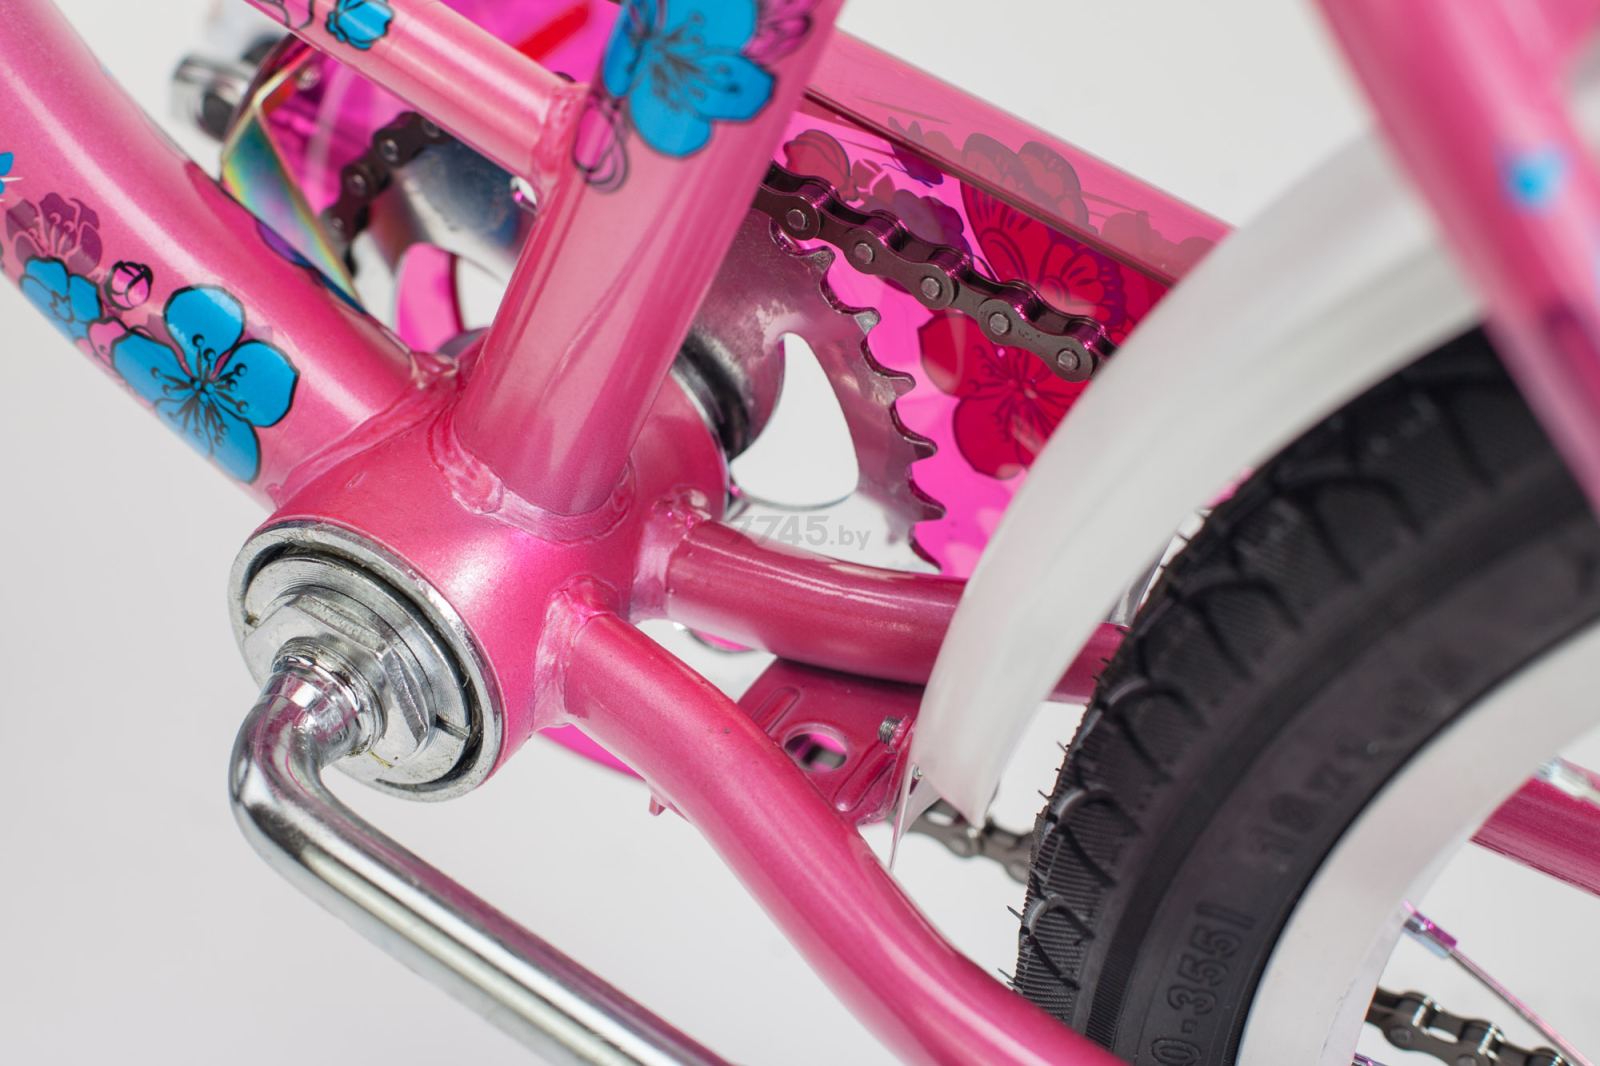 Велосипед детский STELS Wind 18" Z020 розовый - Фото 7